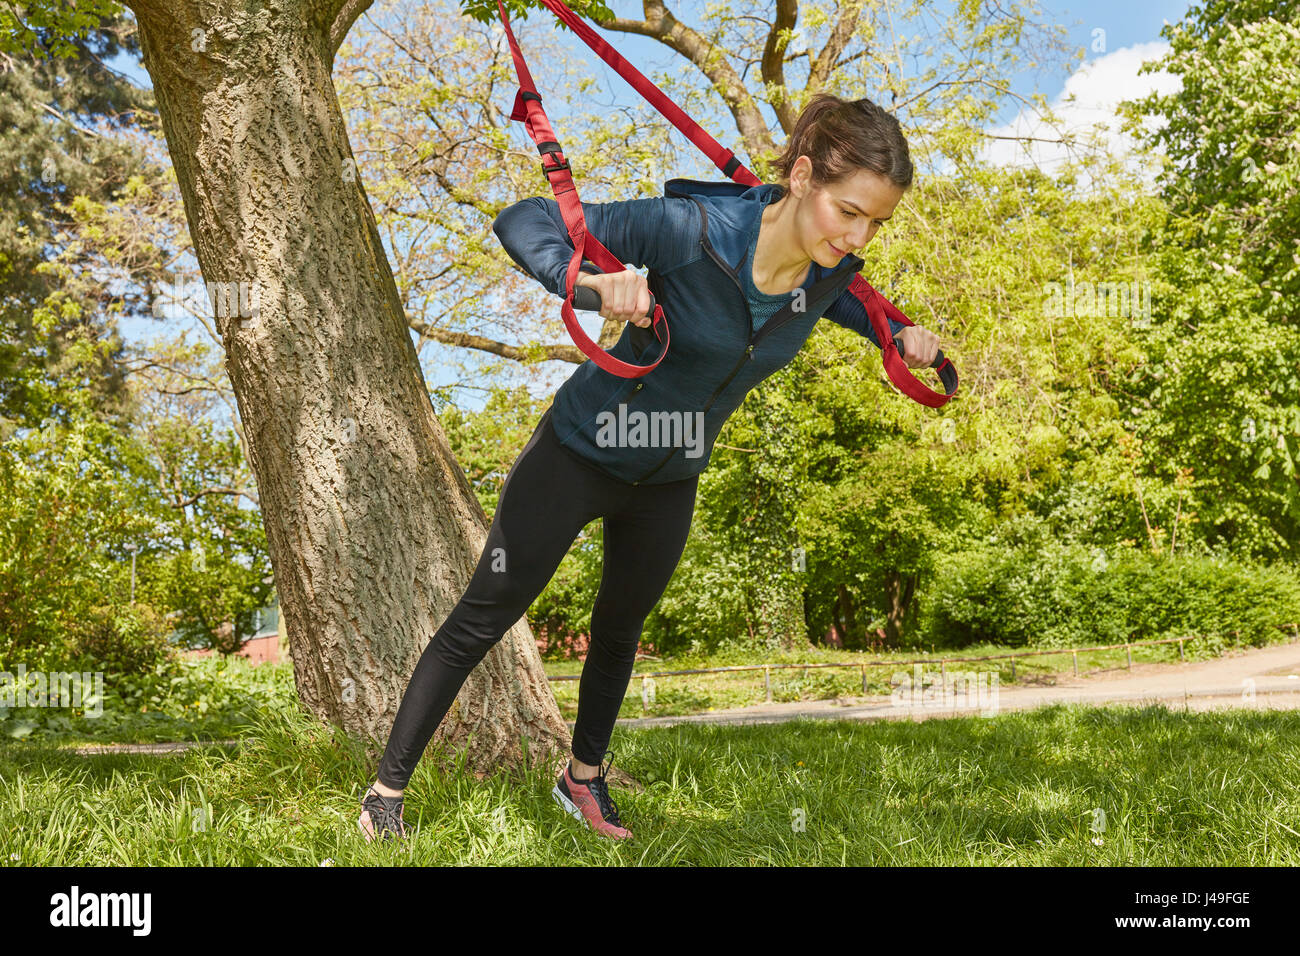 https://c8.alamy.com/comp/J49FGE/woman-sling-training-or-suspension-training-at-park-J49FGE.jpg